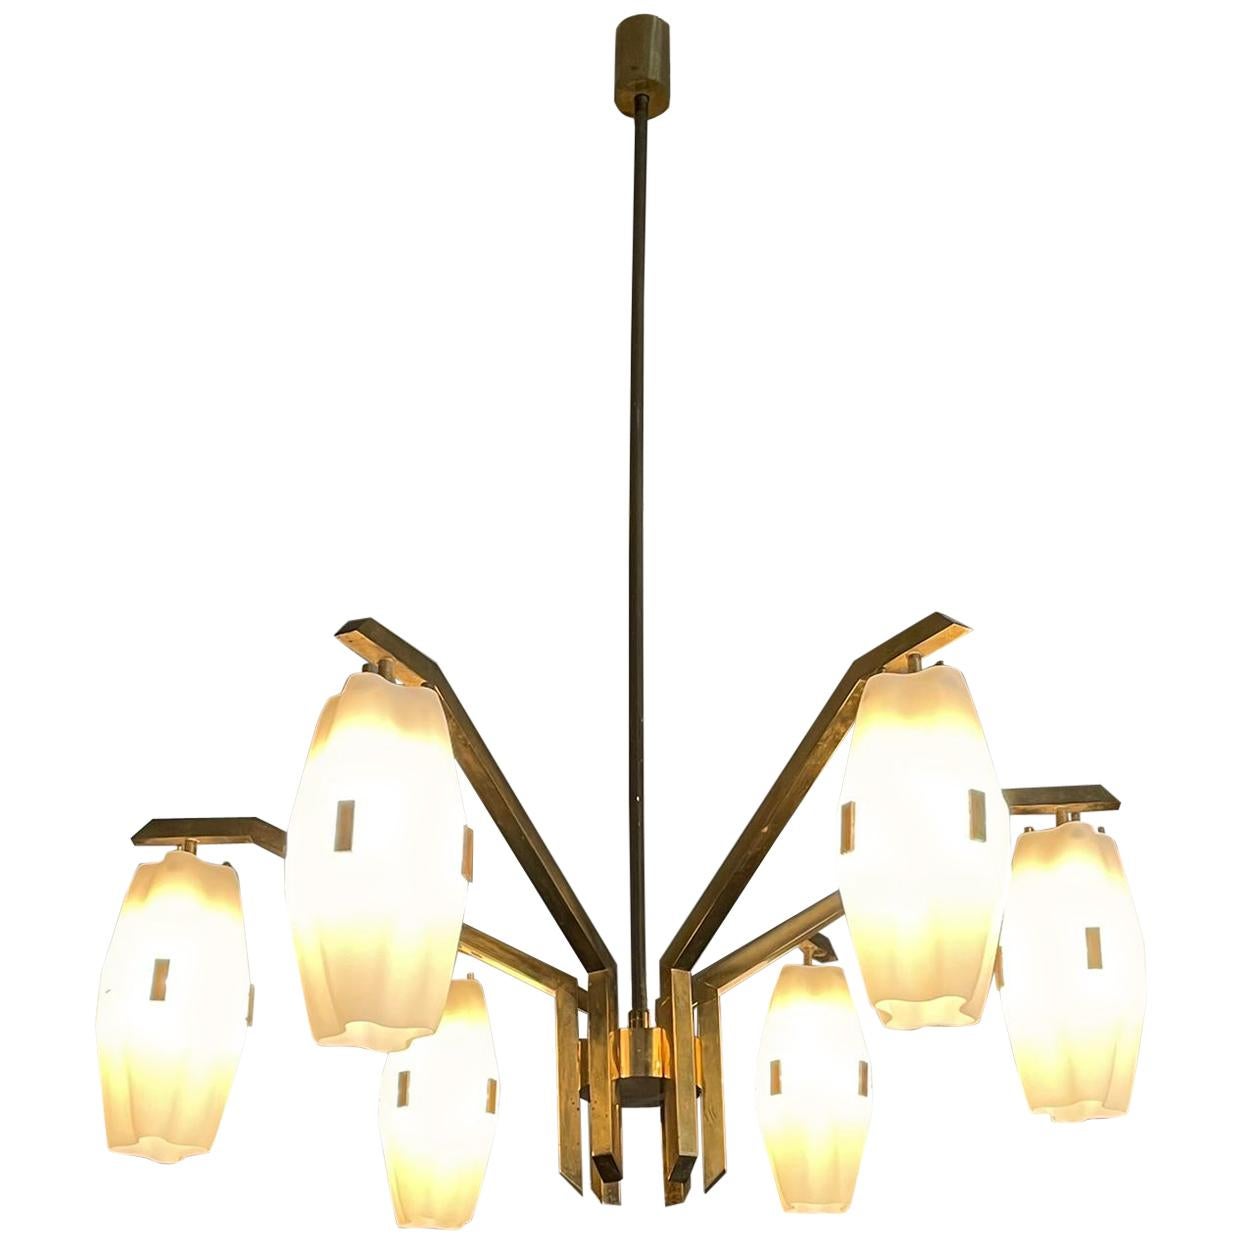 Angelo Lelii Arredoluce Mod. 12780 Brass Ceiling Lamp 1959 Excellent Patina For Sale